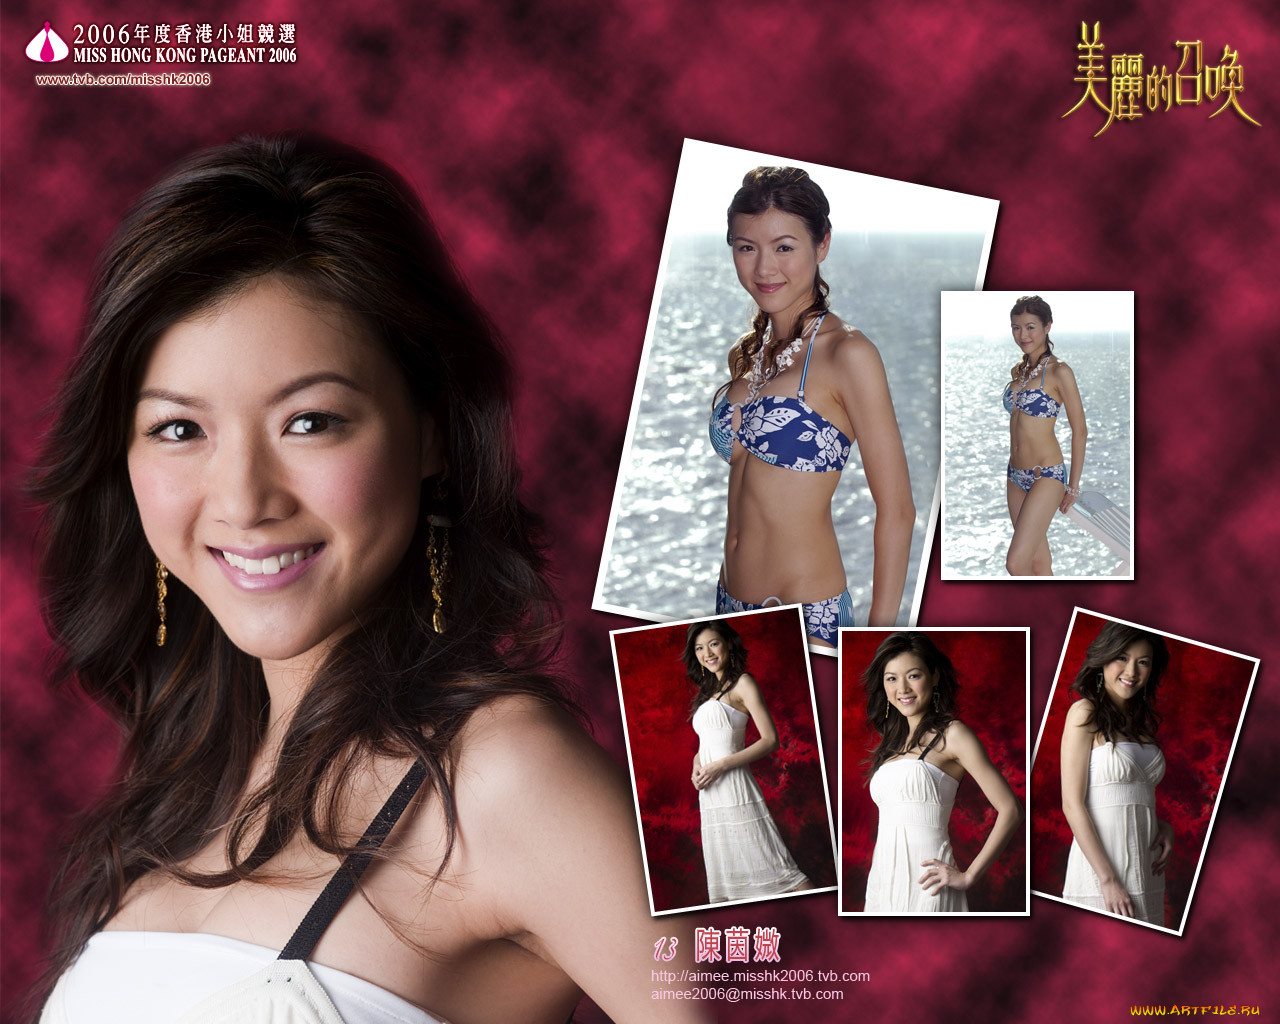 Miss Hong Kong 2006, 